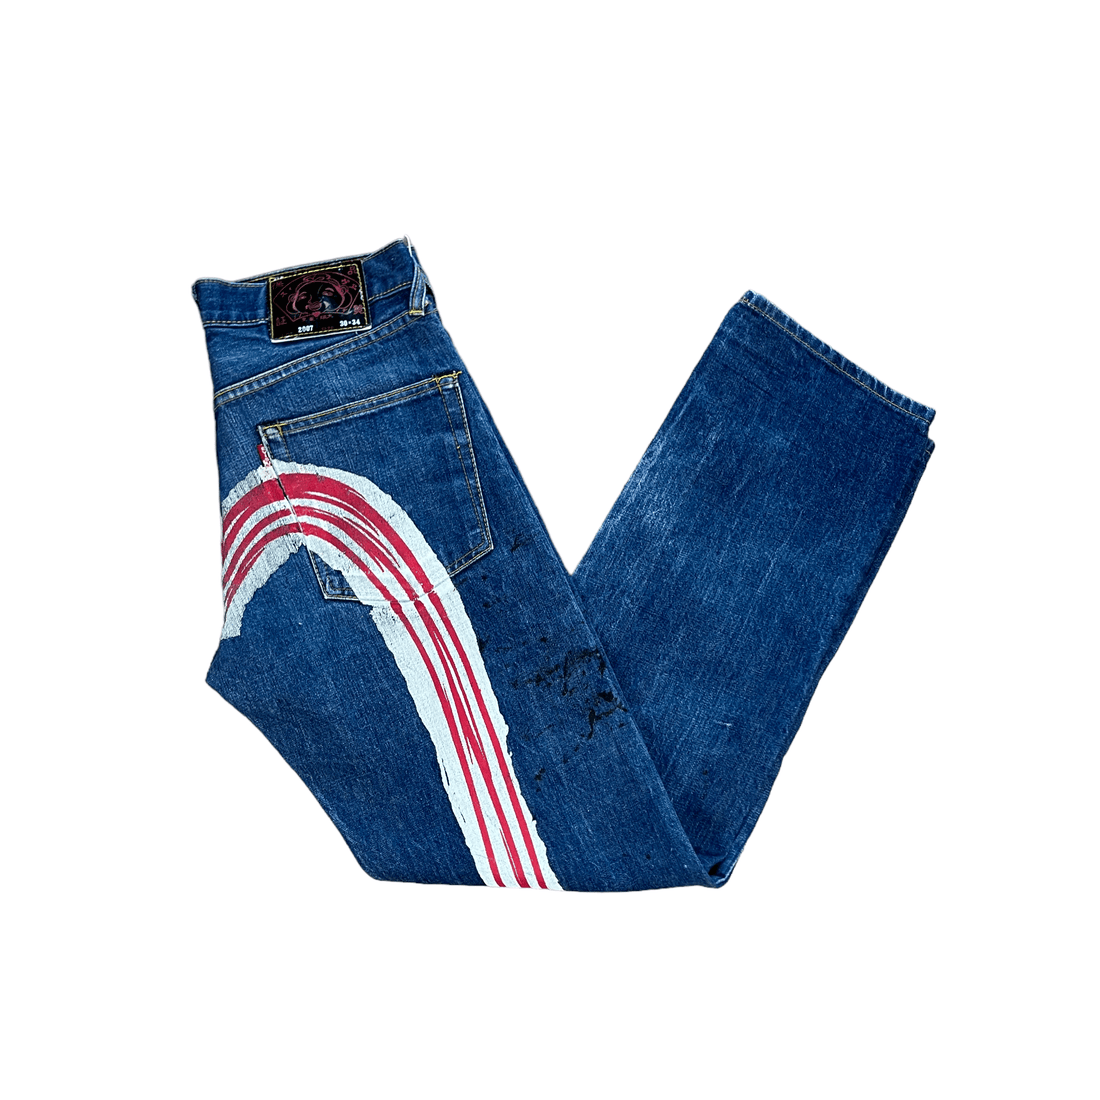 Vintage Evisu Jeans - 30” x 34” - The Streetwear Studio